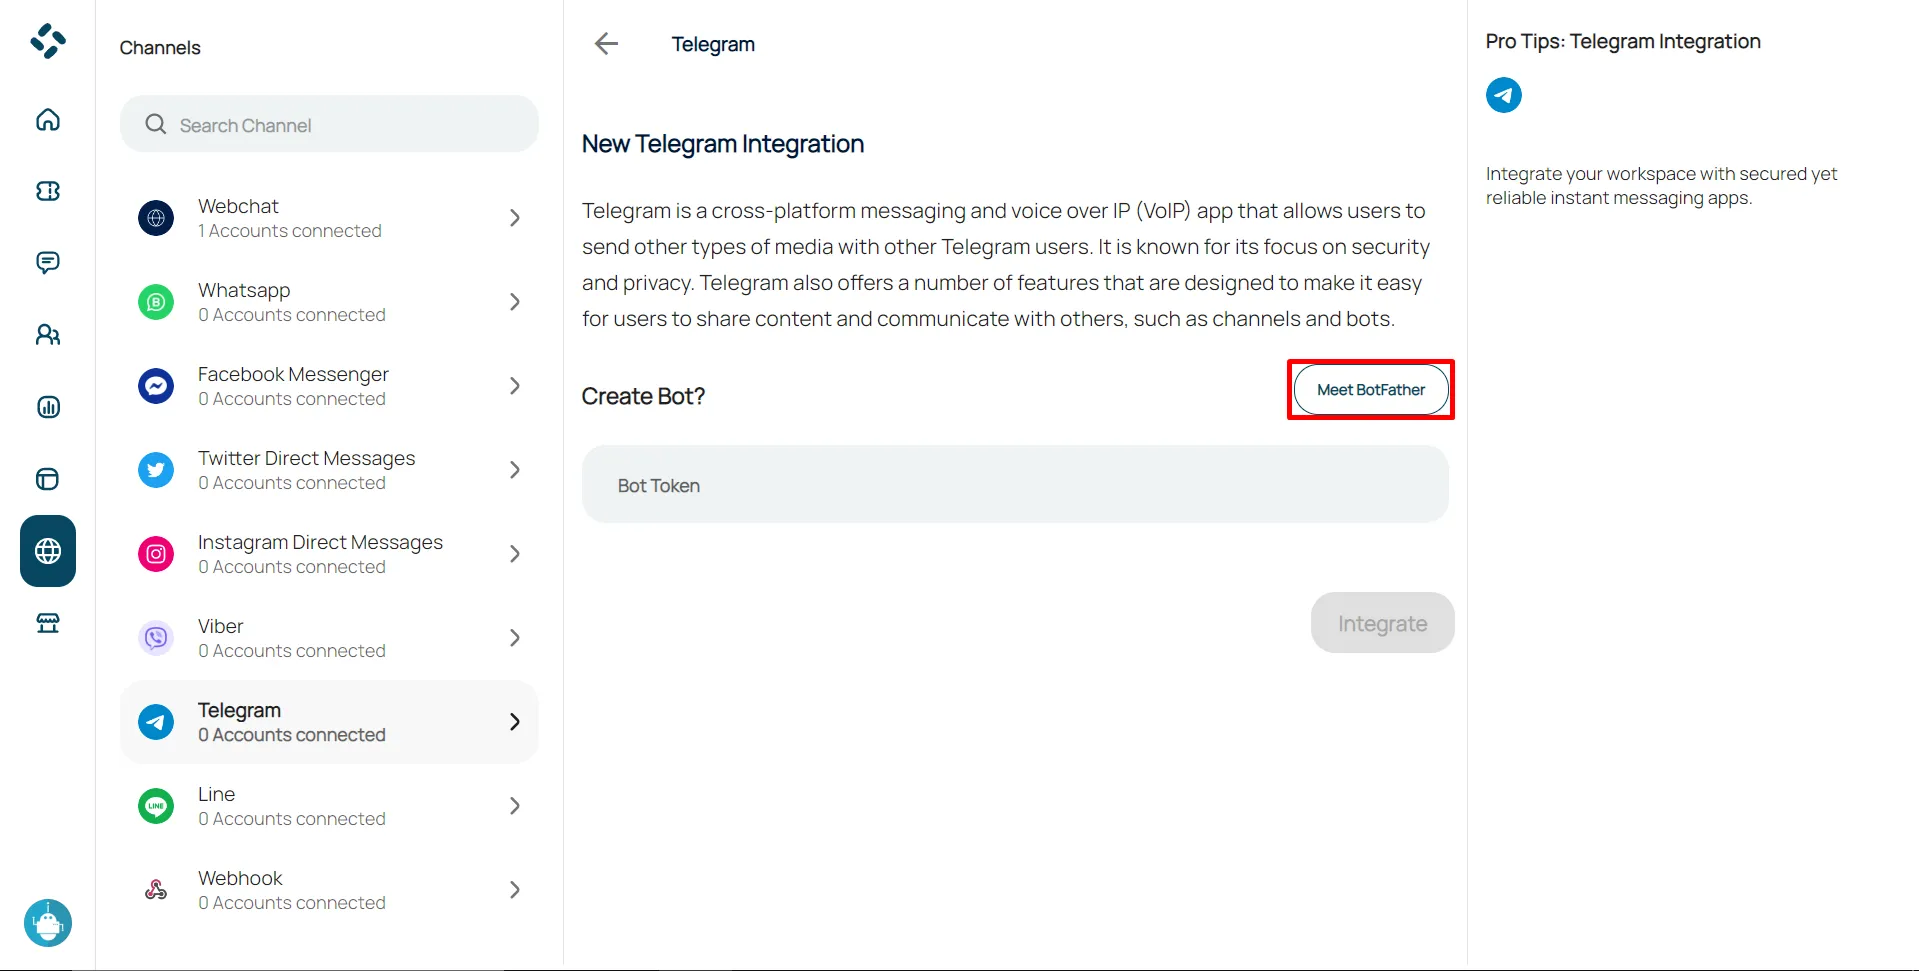 Step 2: Telegram integration setup